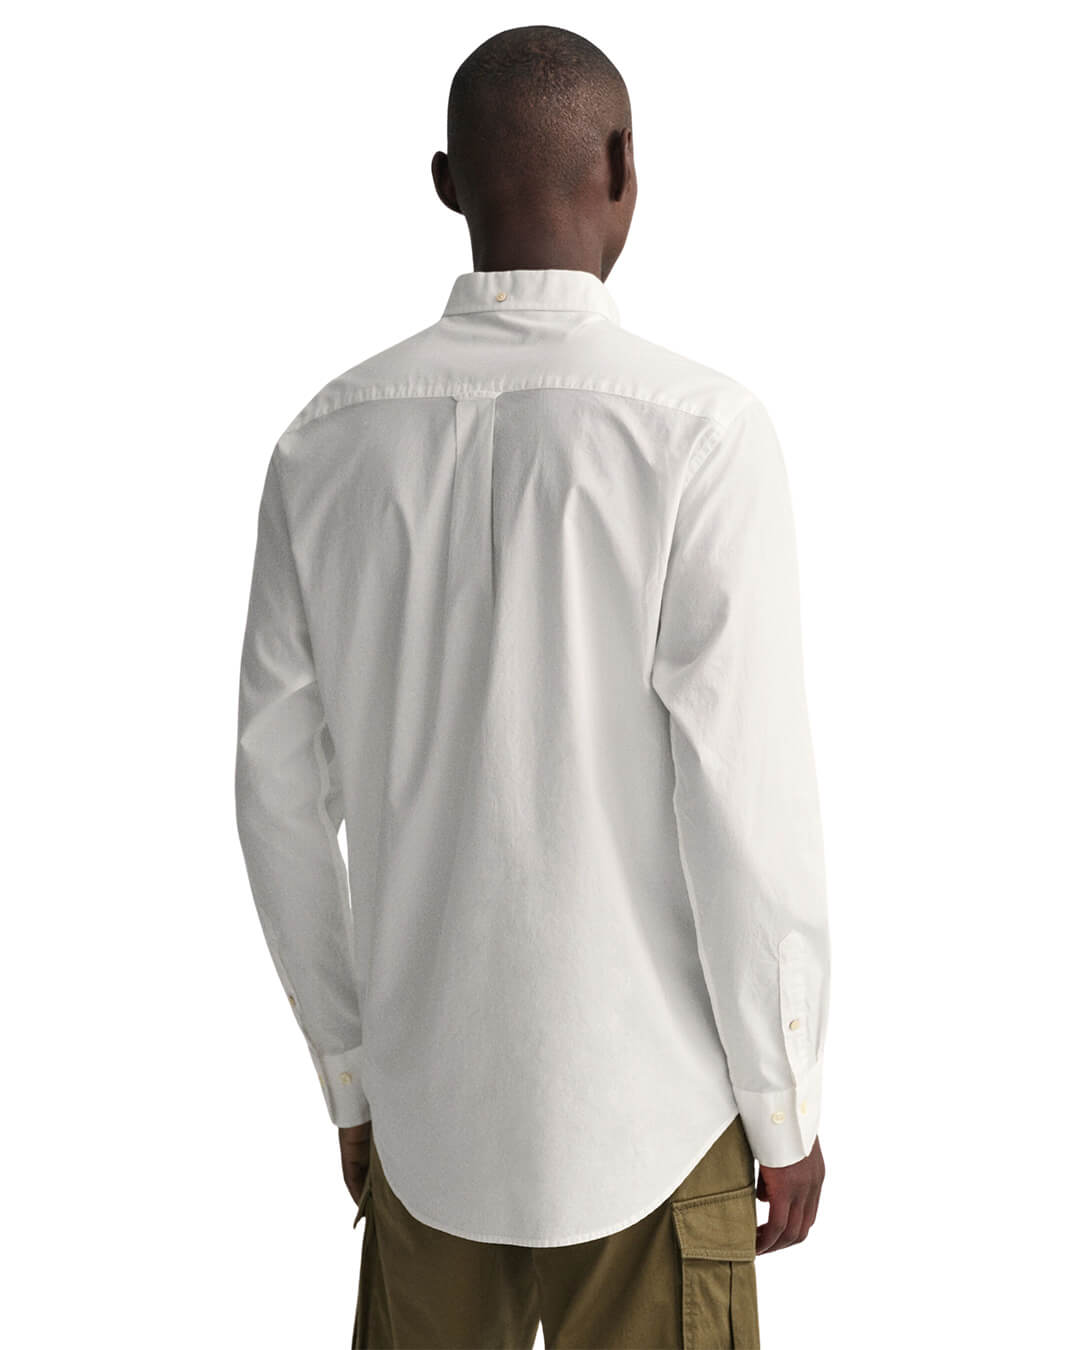 Gant Shirts Gant White Regular Fit Broadcloth Shirt